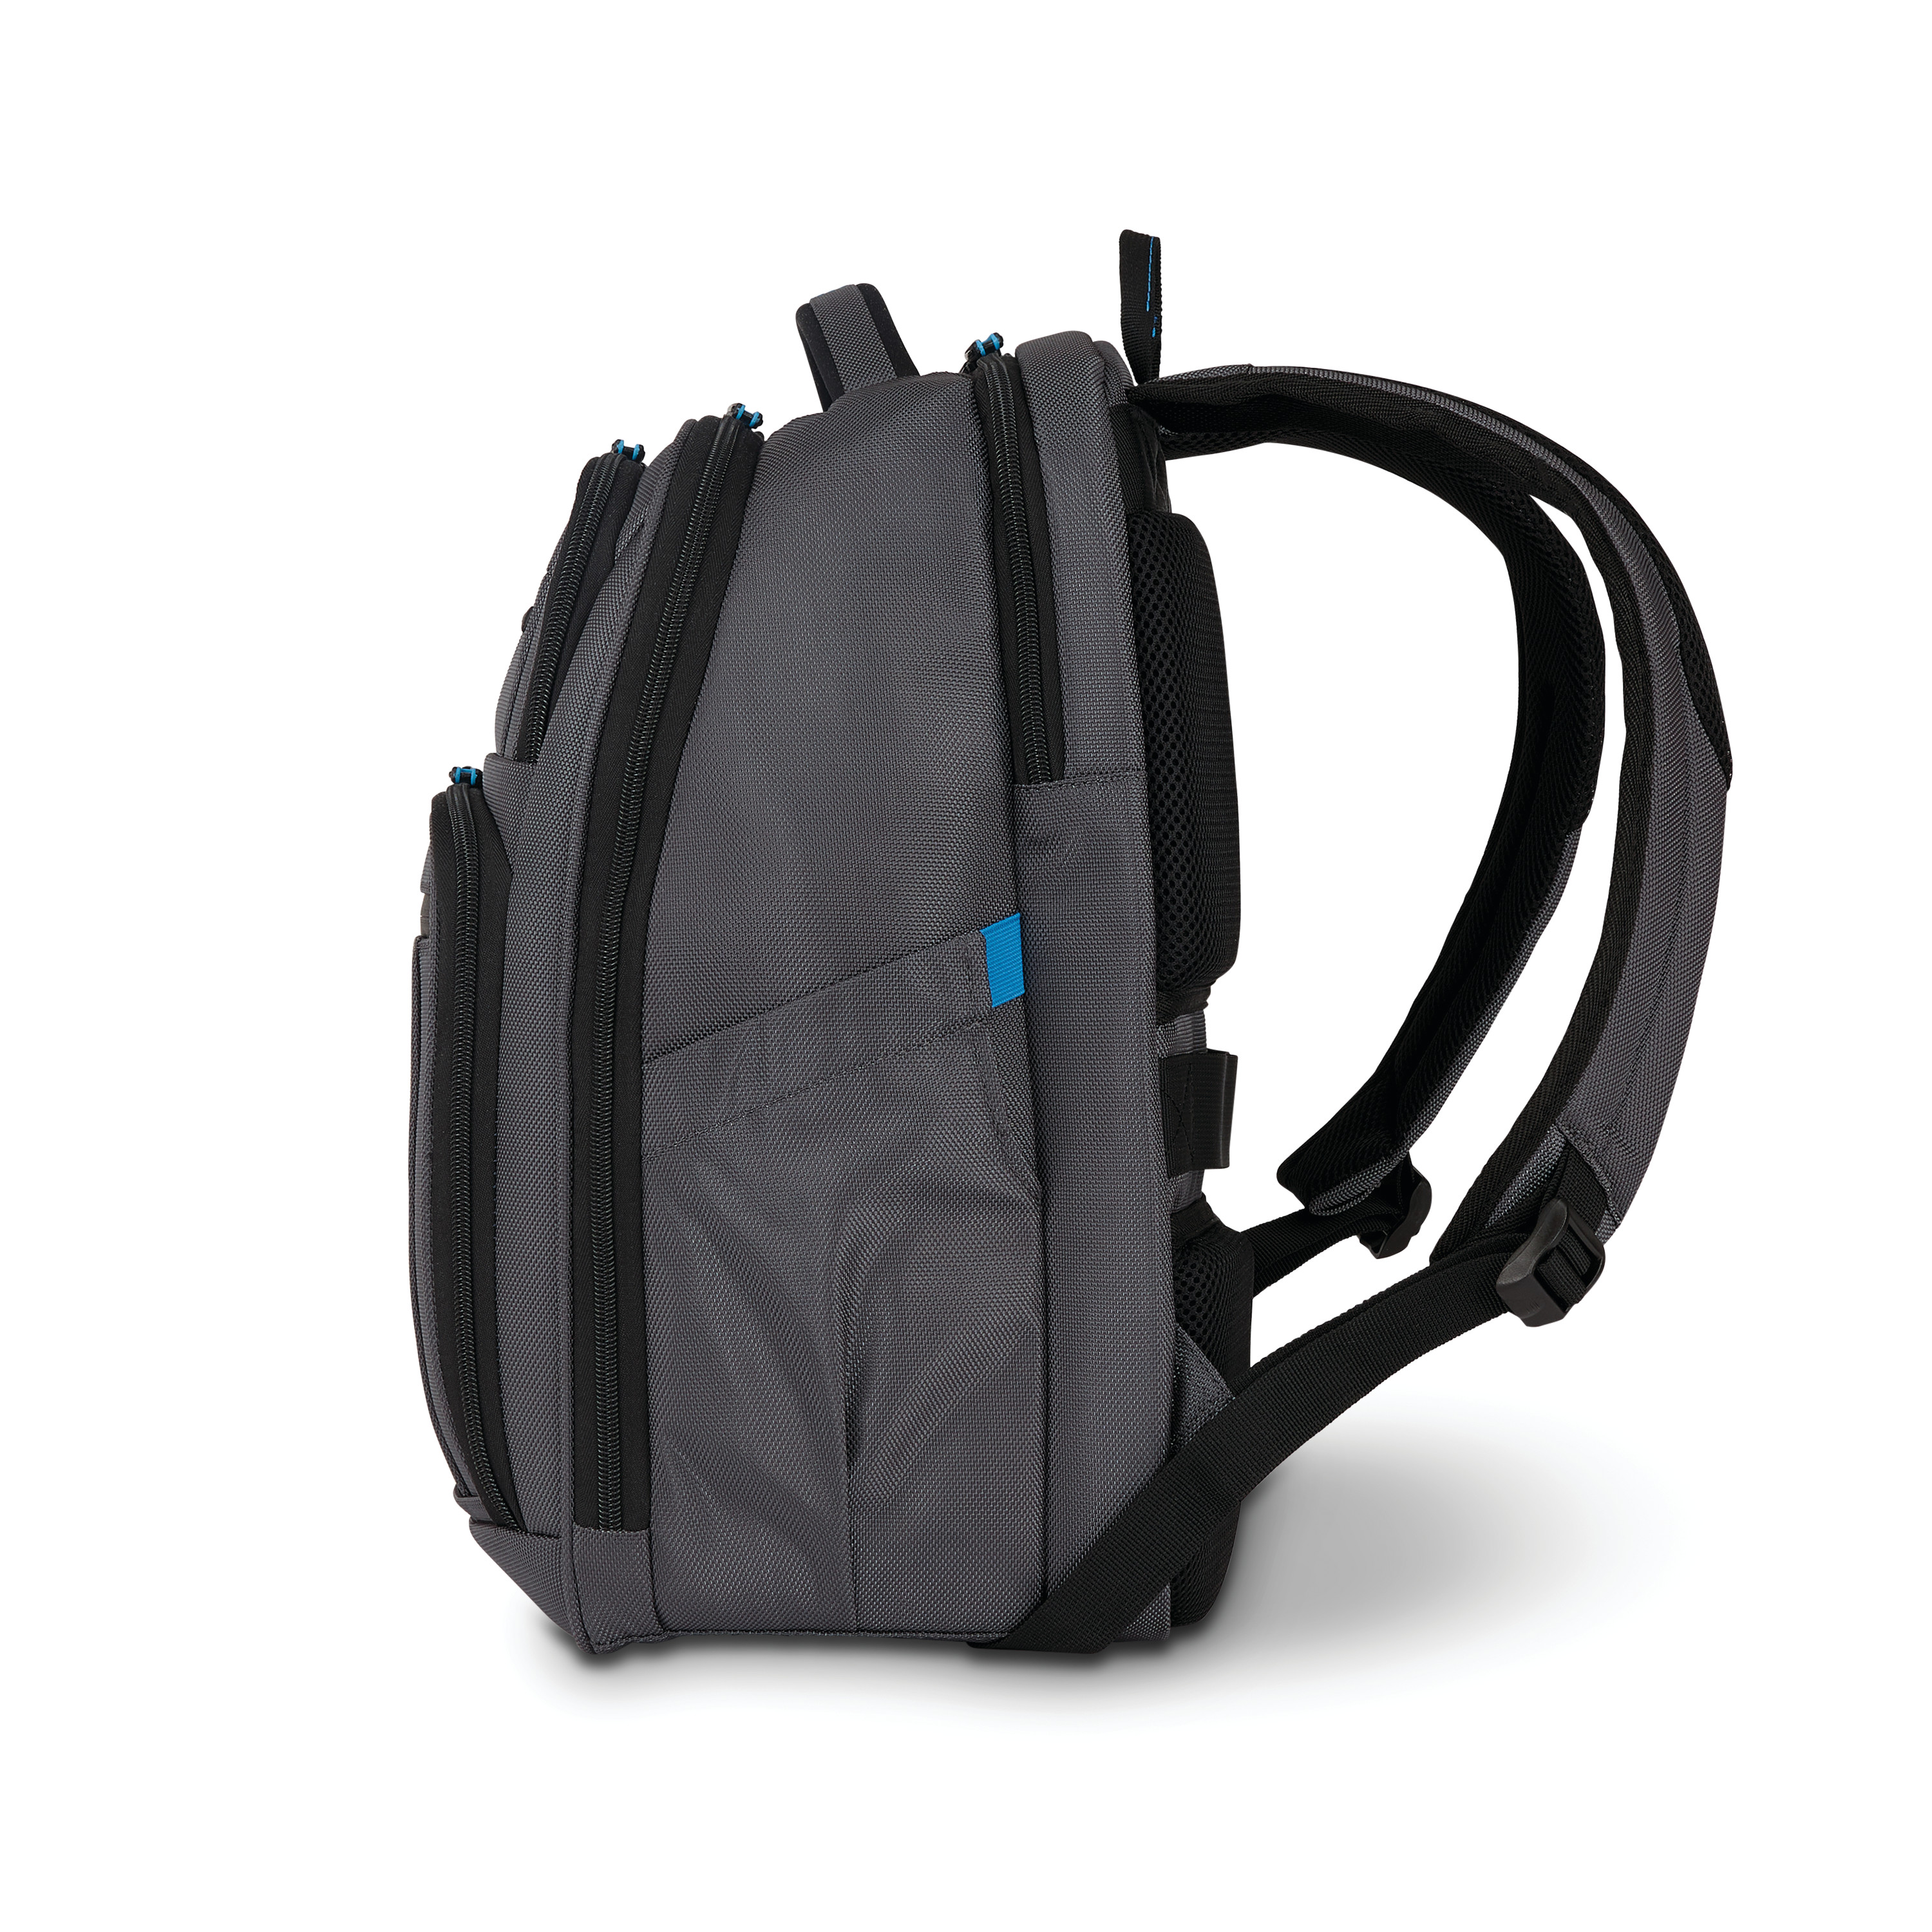 Buy Novex Laptop Backpack for USD 74.99 | Samsonite US